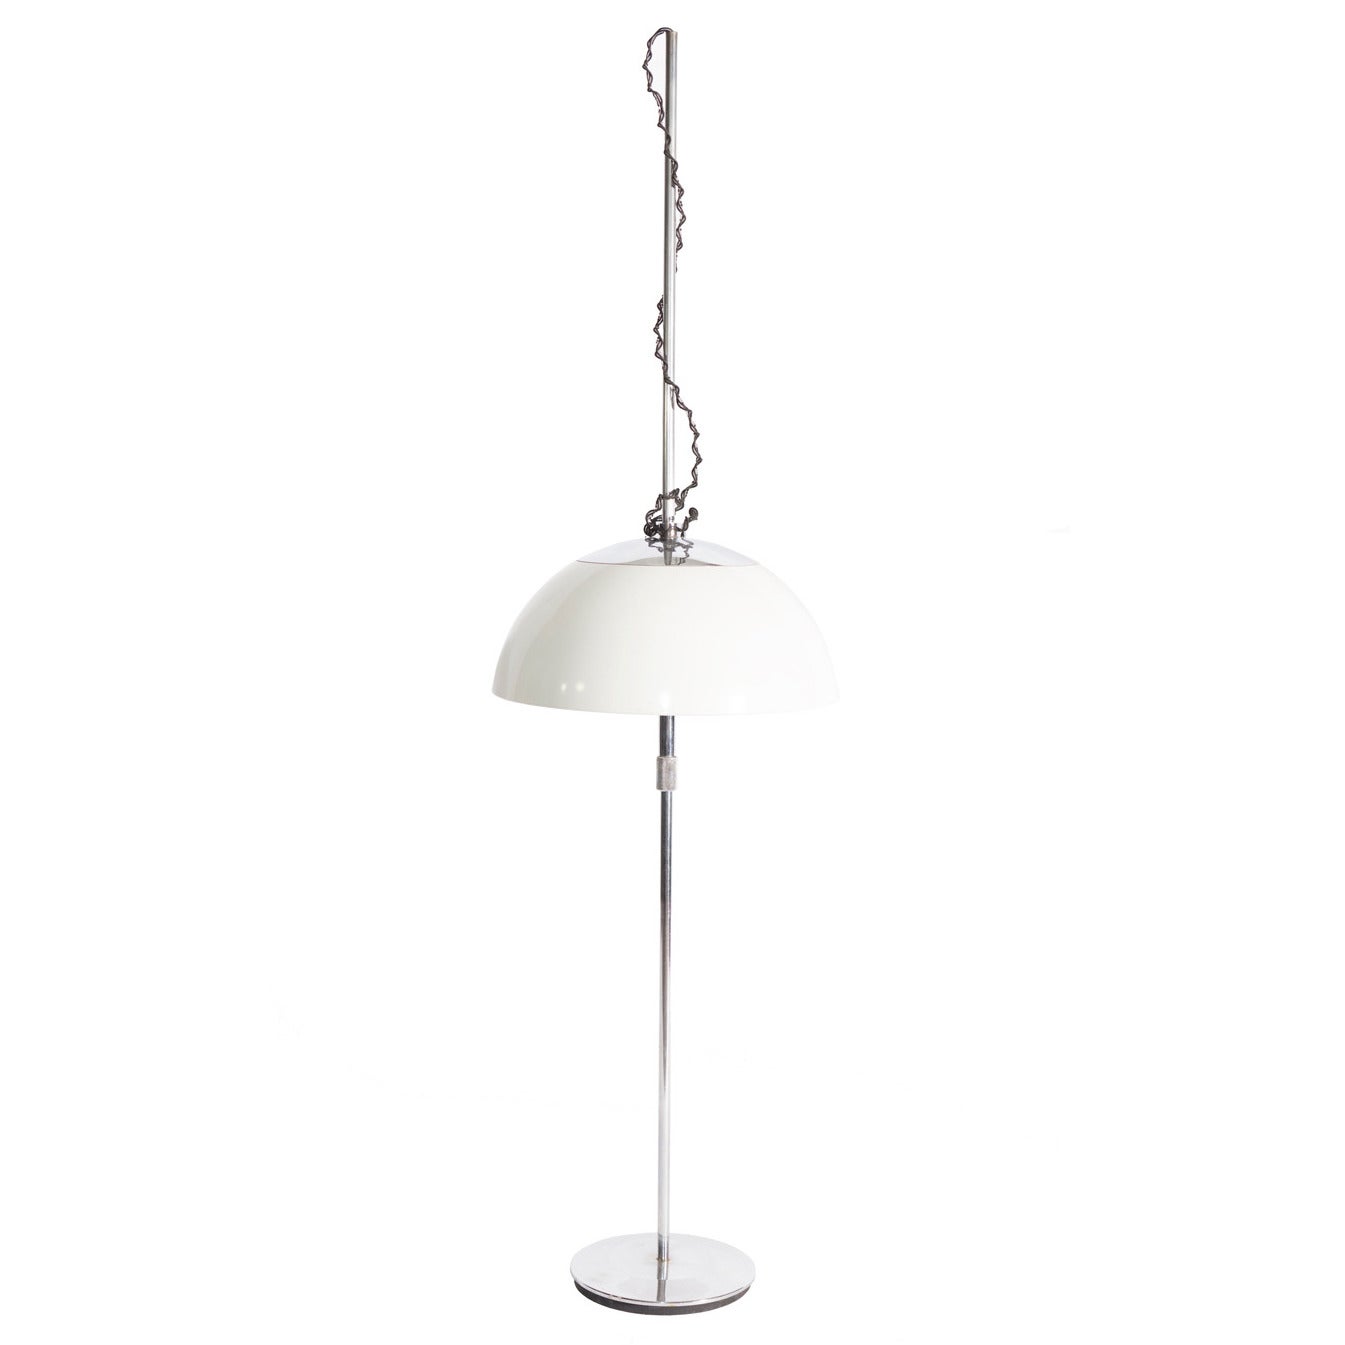 1960s Italian Floor Lamp For Sale